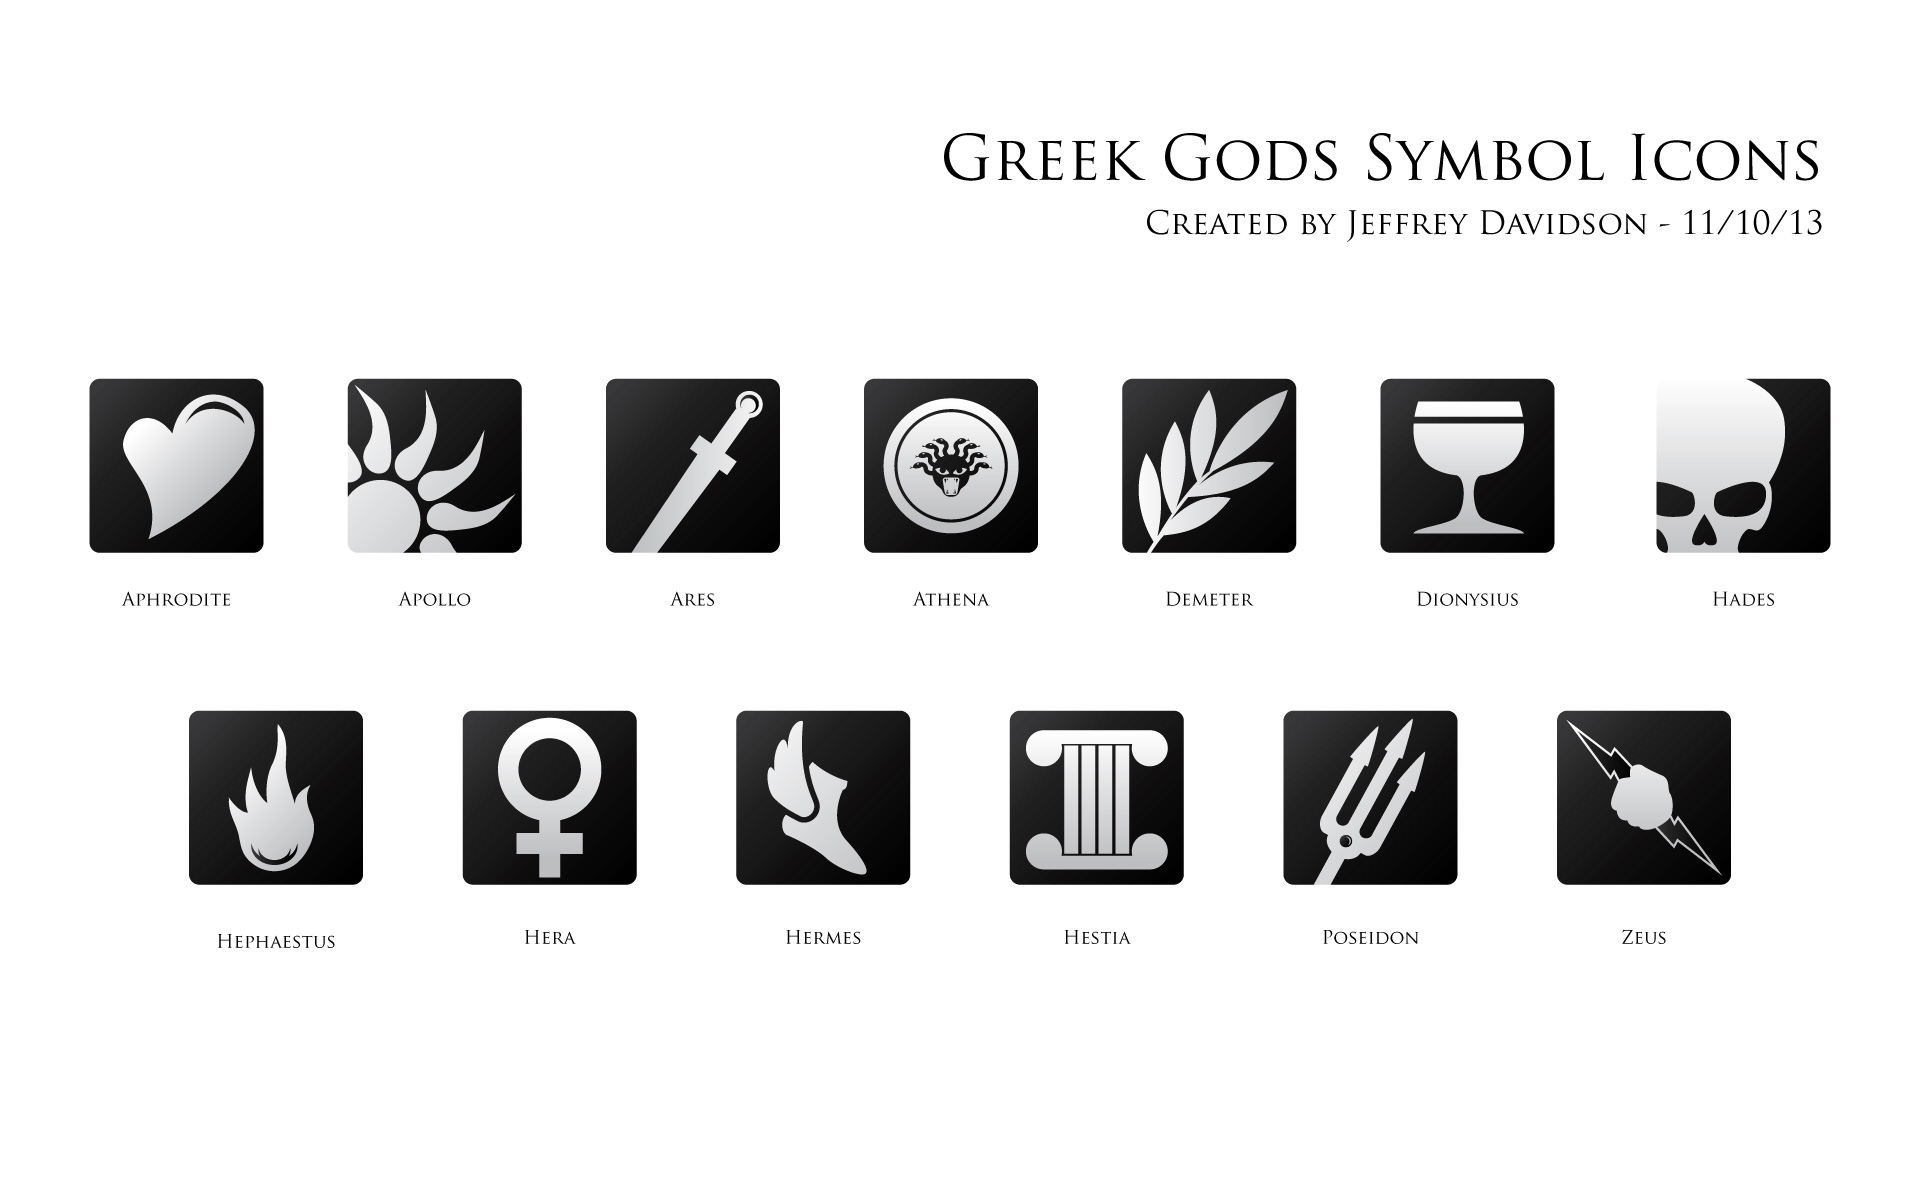 Greek Gods Symbol Icons by JeffreyDavidson23 on DeviantArt